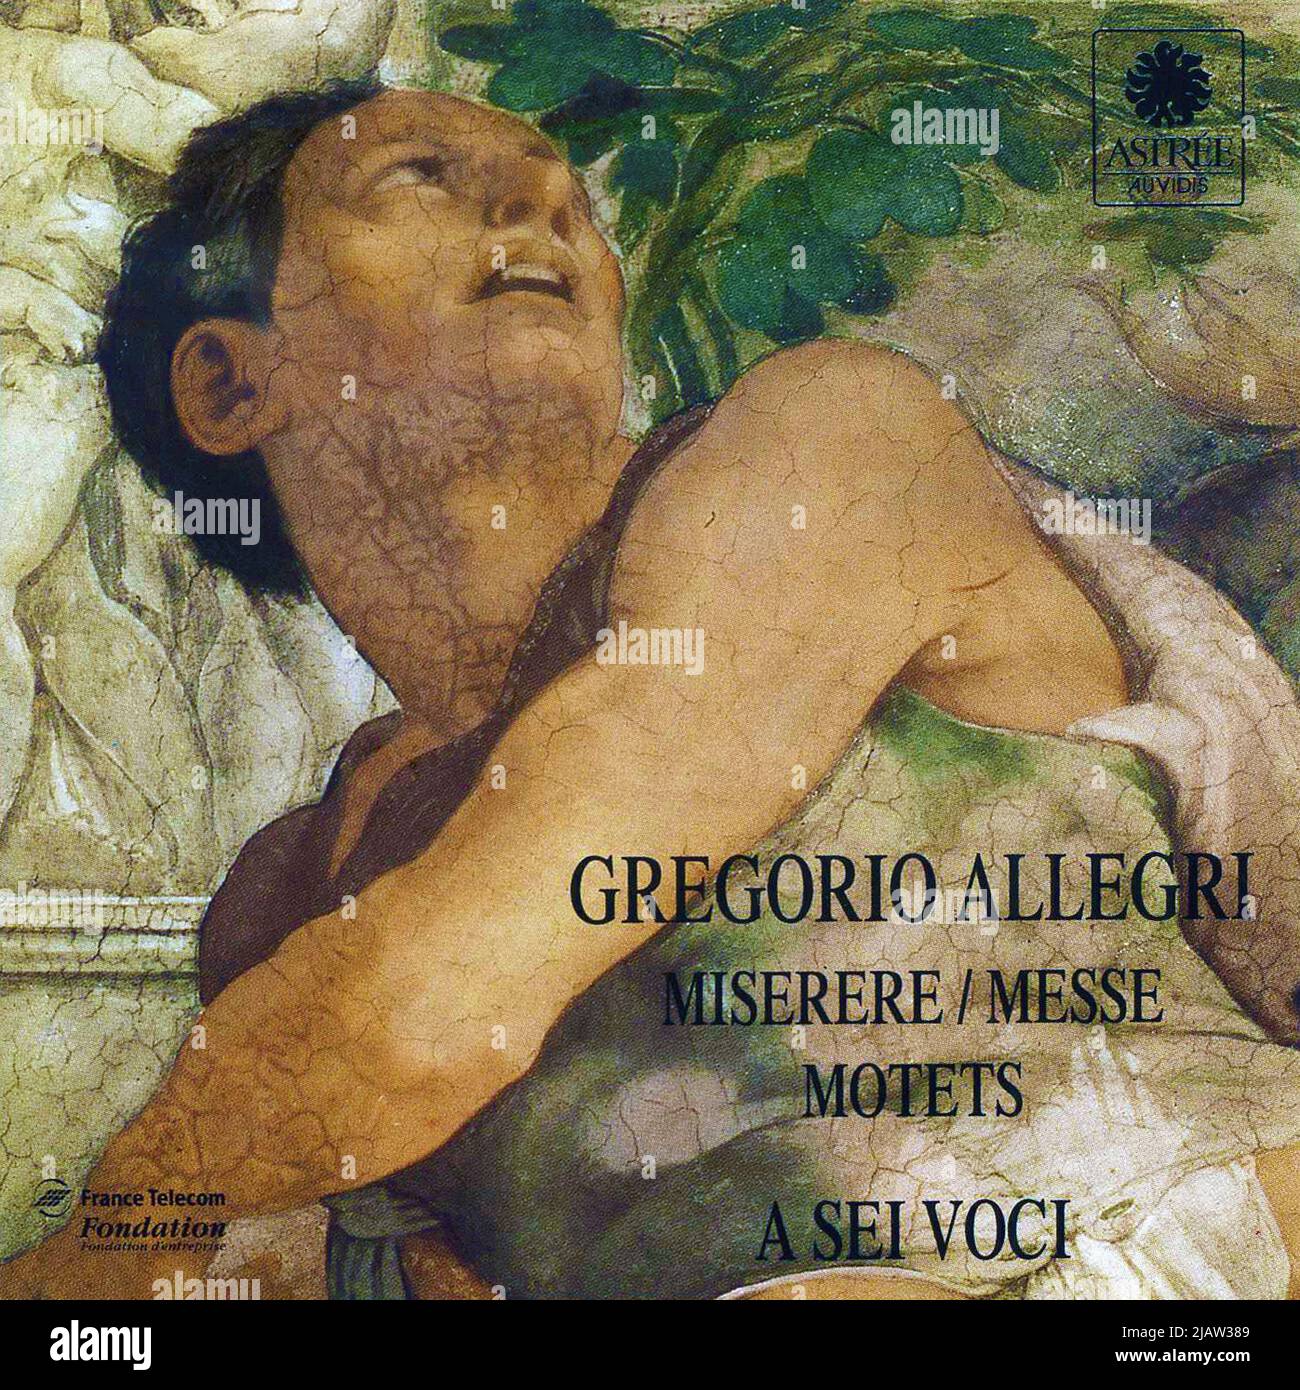 Cubierta de CD. 'Mamerere/Messe Motets. Gregorio Allegri. Un Sei Voci. Foto de stock